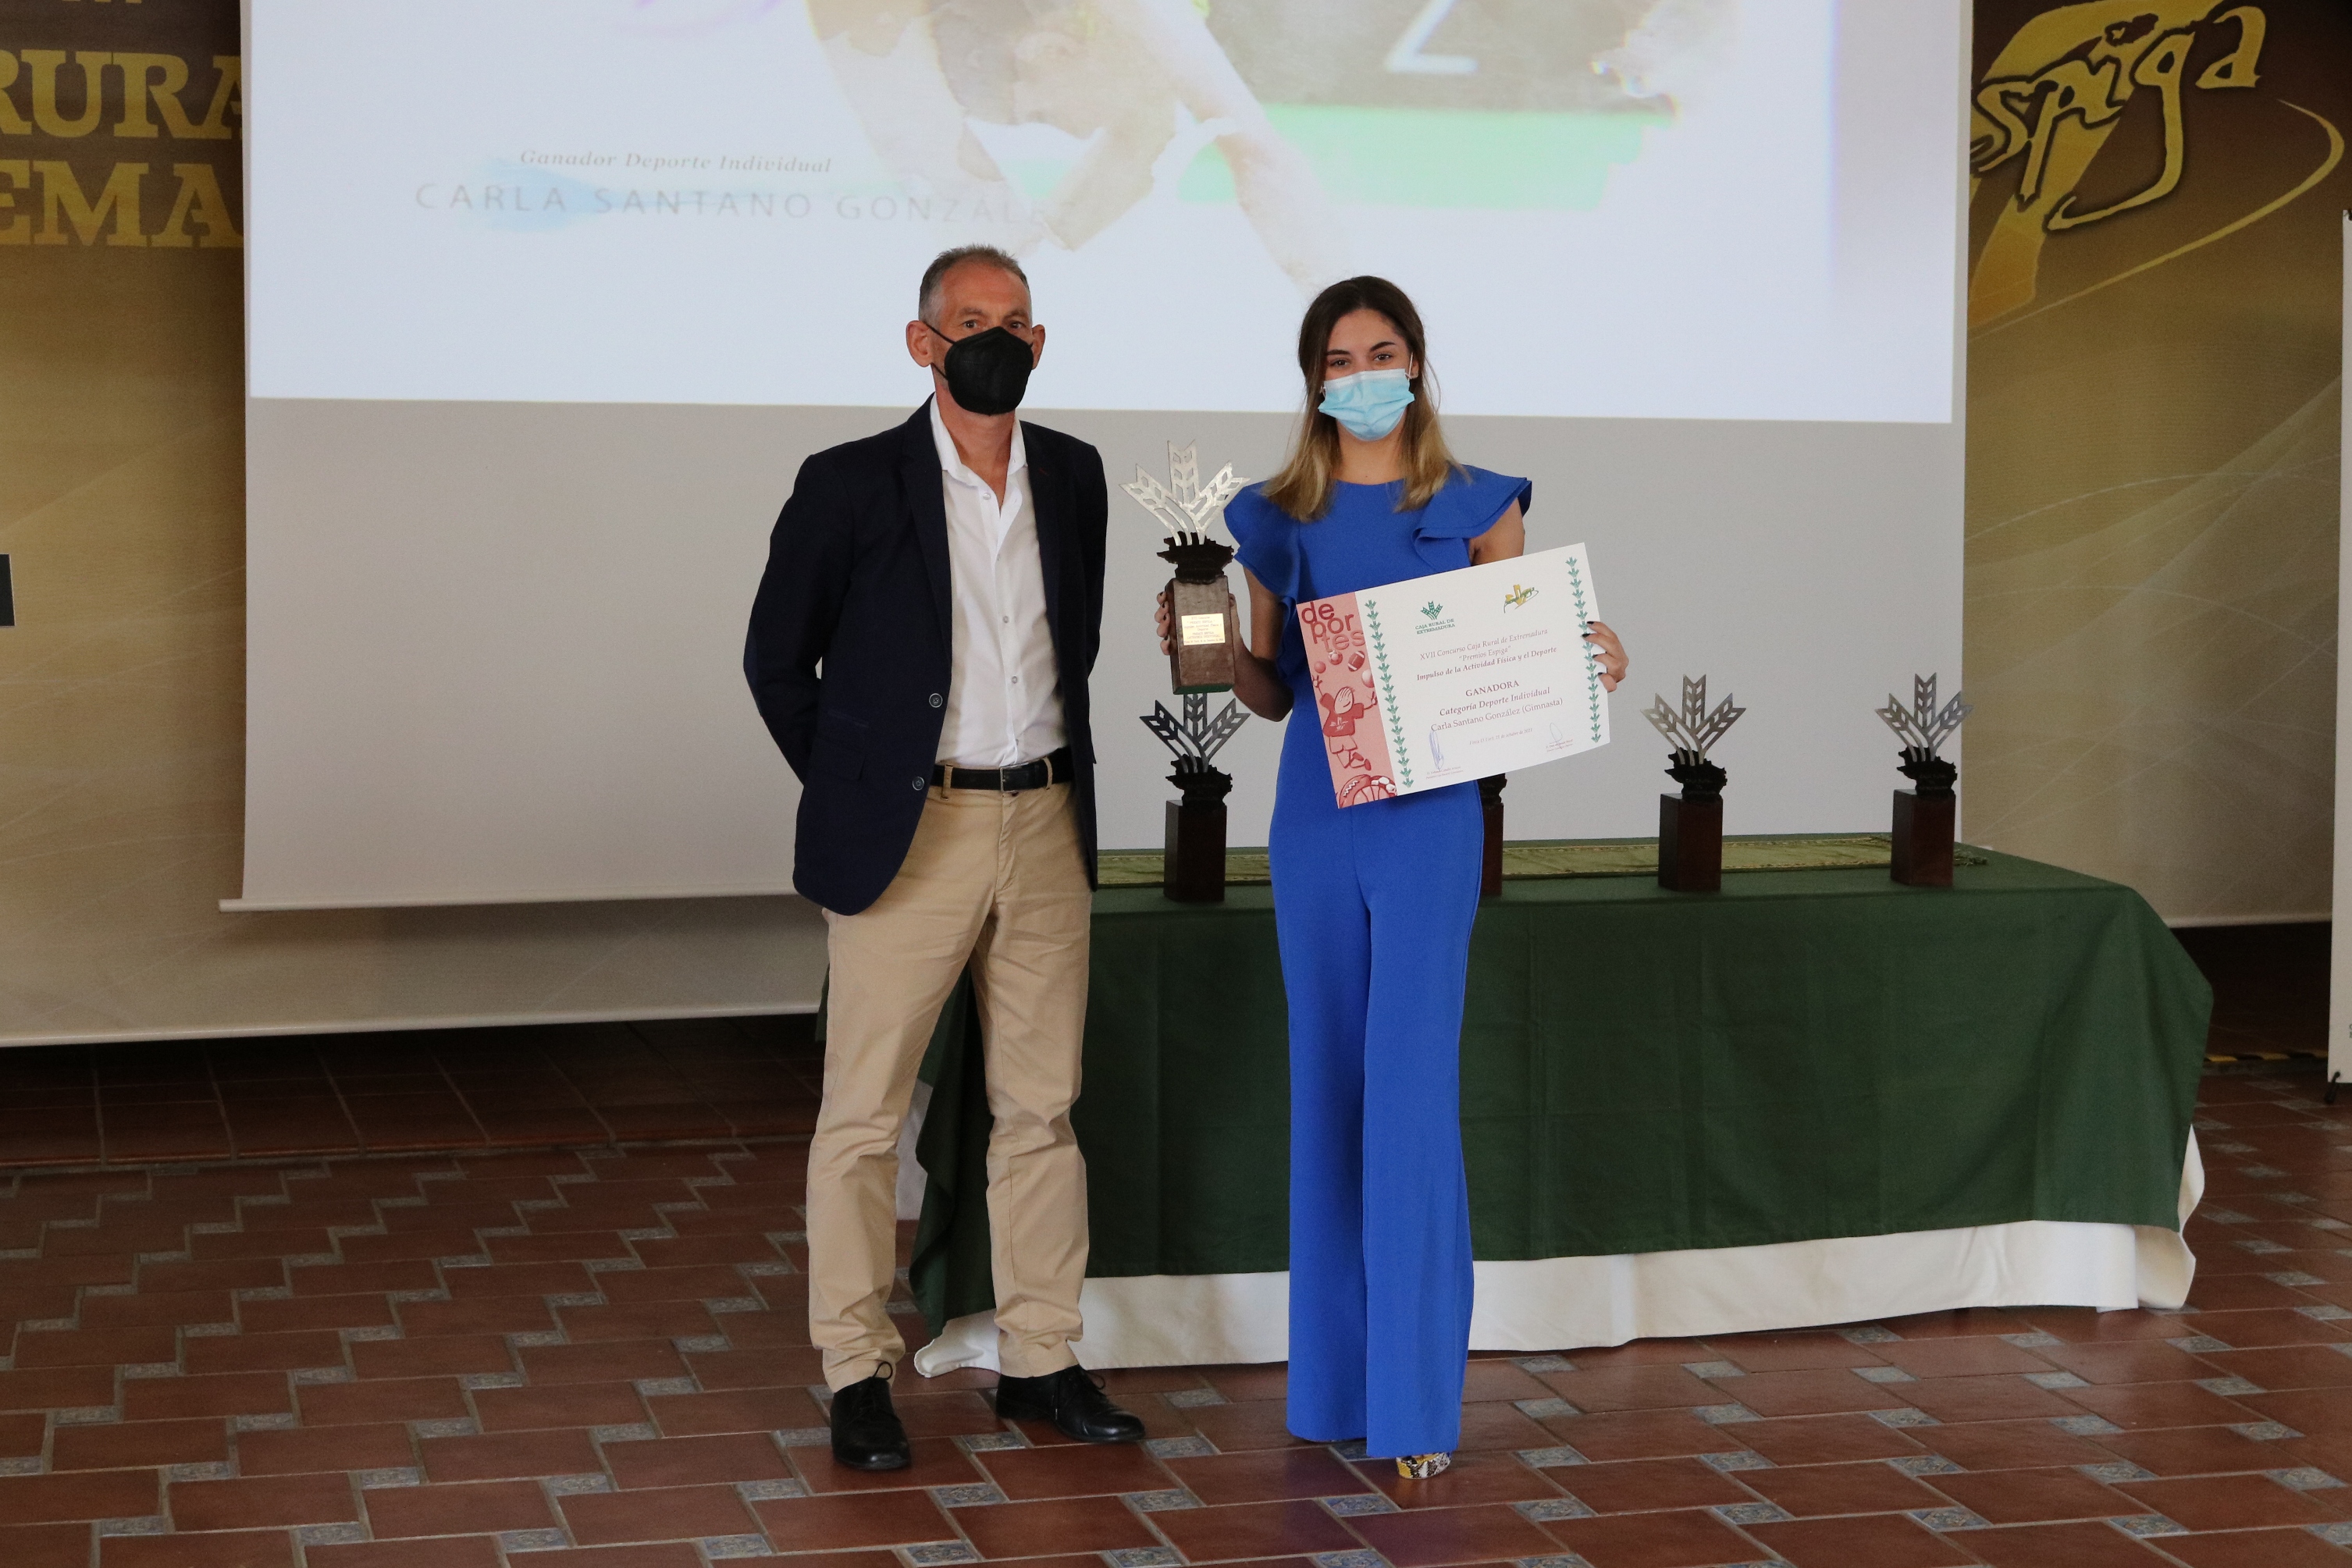 Premio Espiga Deporte Individual a Carla Santano